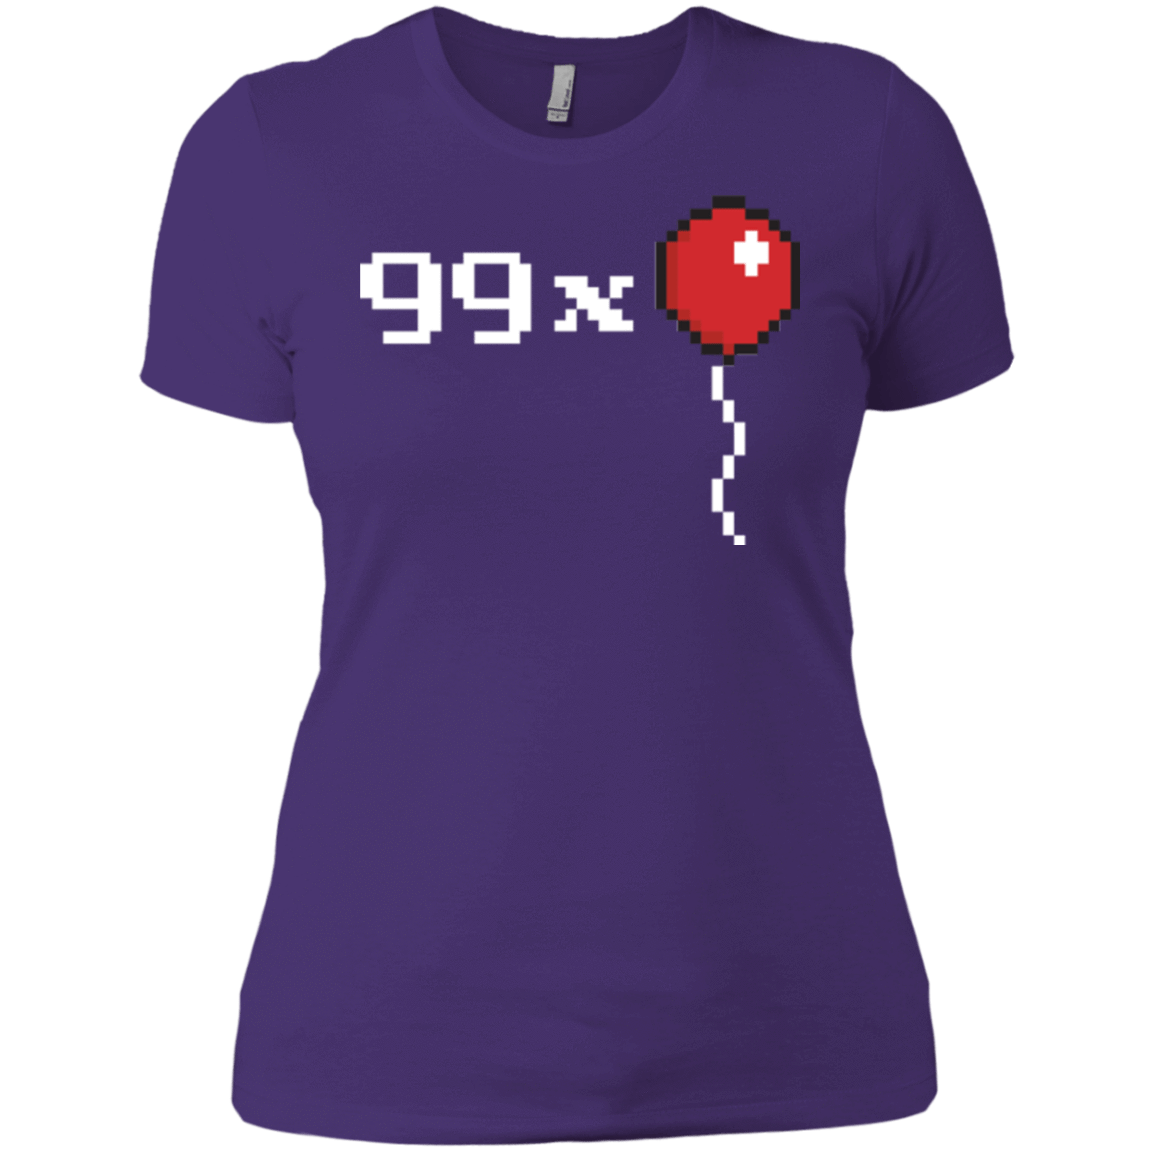 T-Shirts Purple / X-Small 99x Balloon Women's Premium T-Shirt